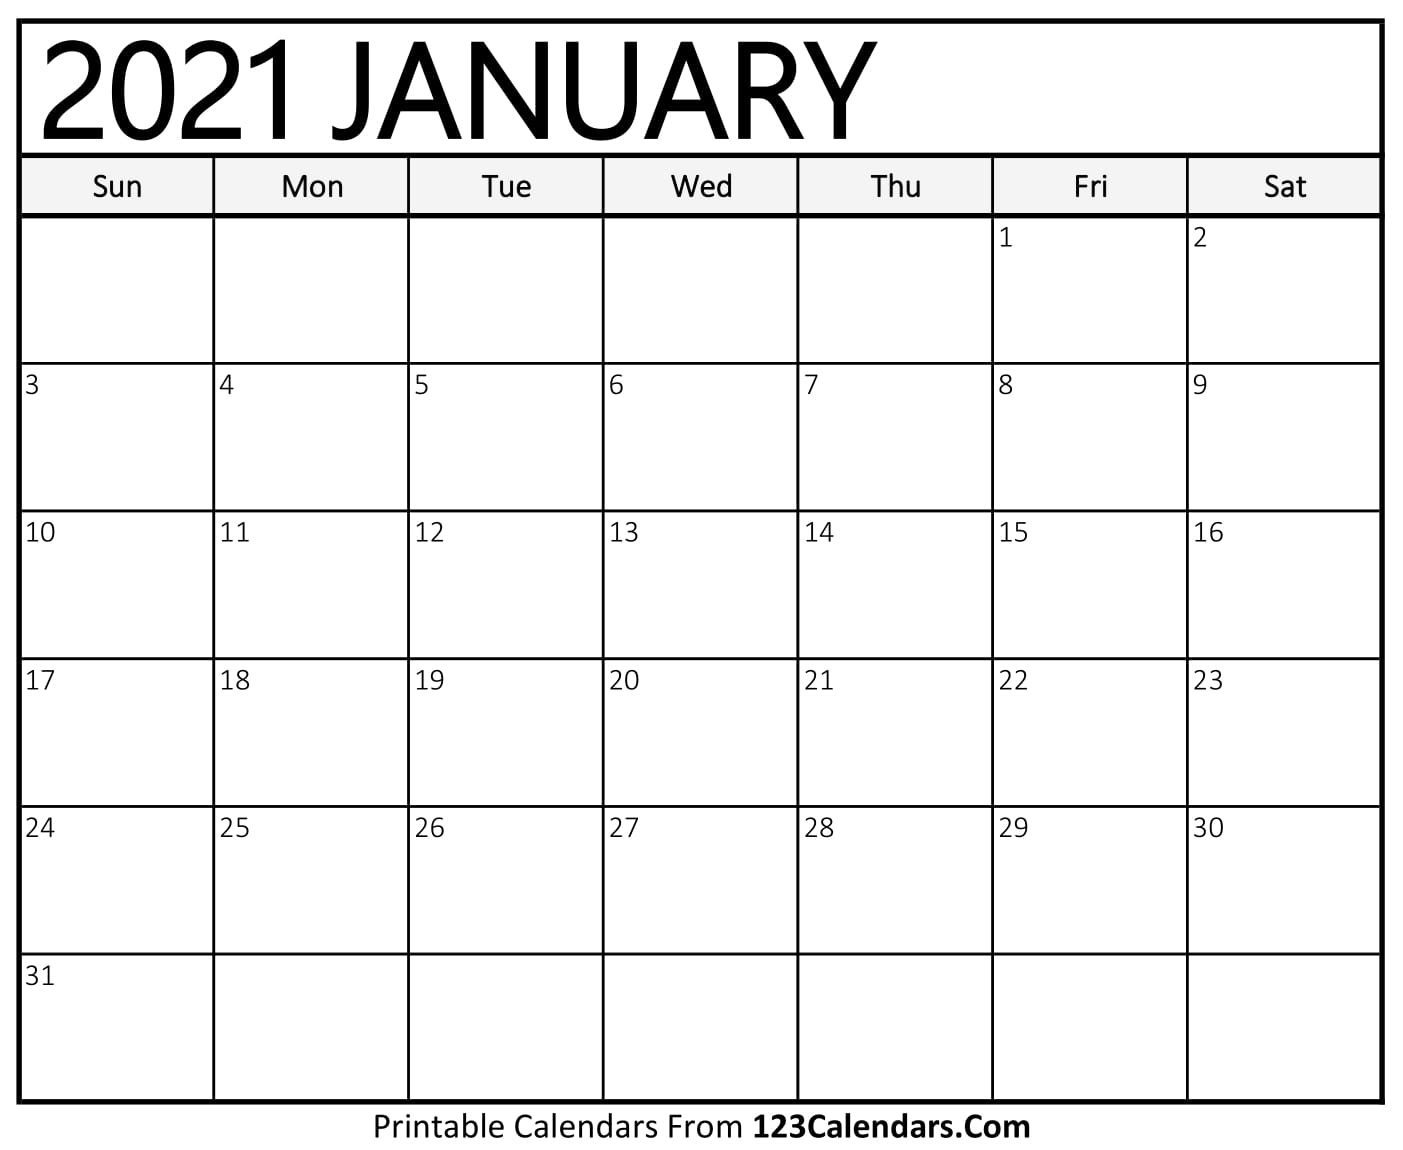 2021 Printable Calendar | 123Calendars Monthly Calendars Free Ruled 2021